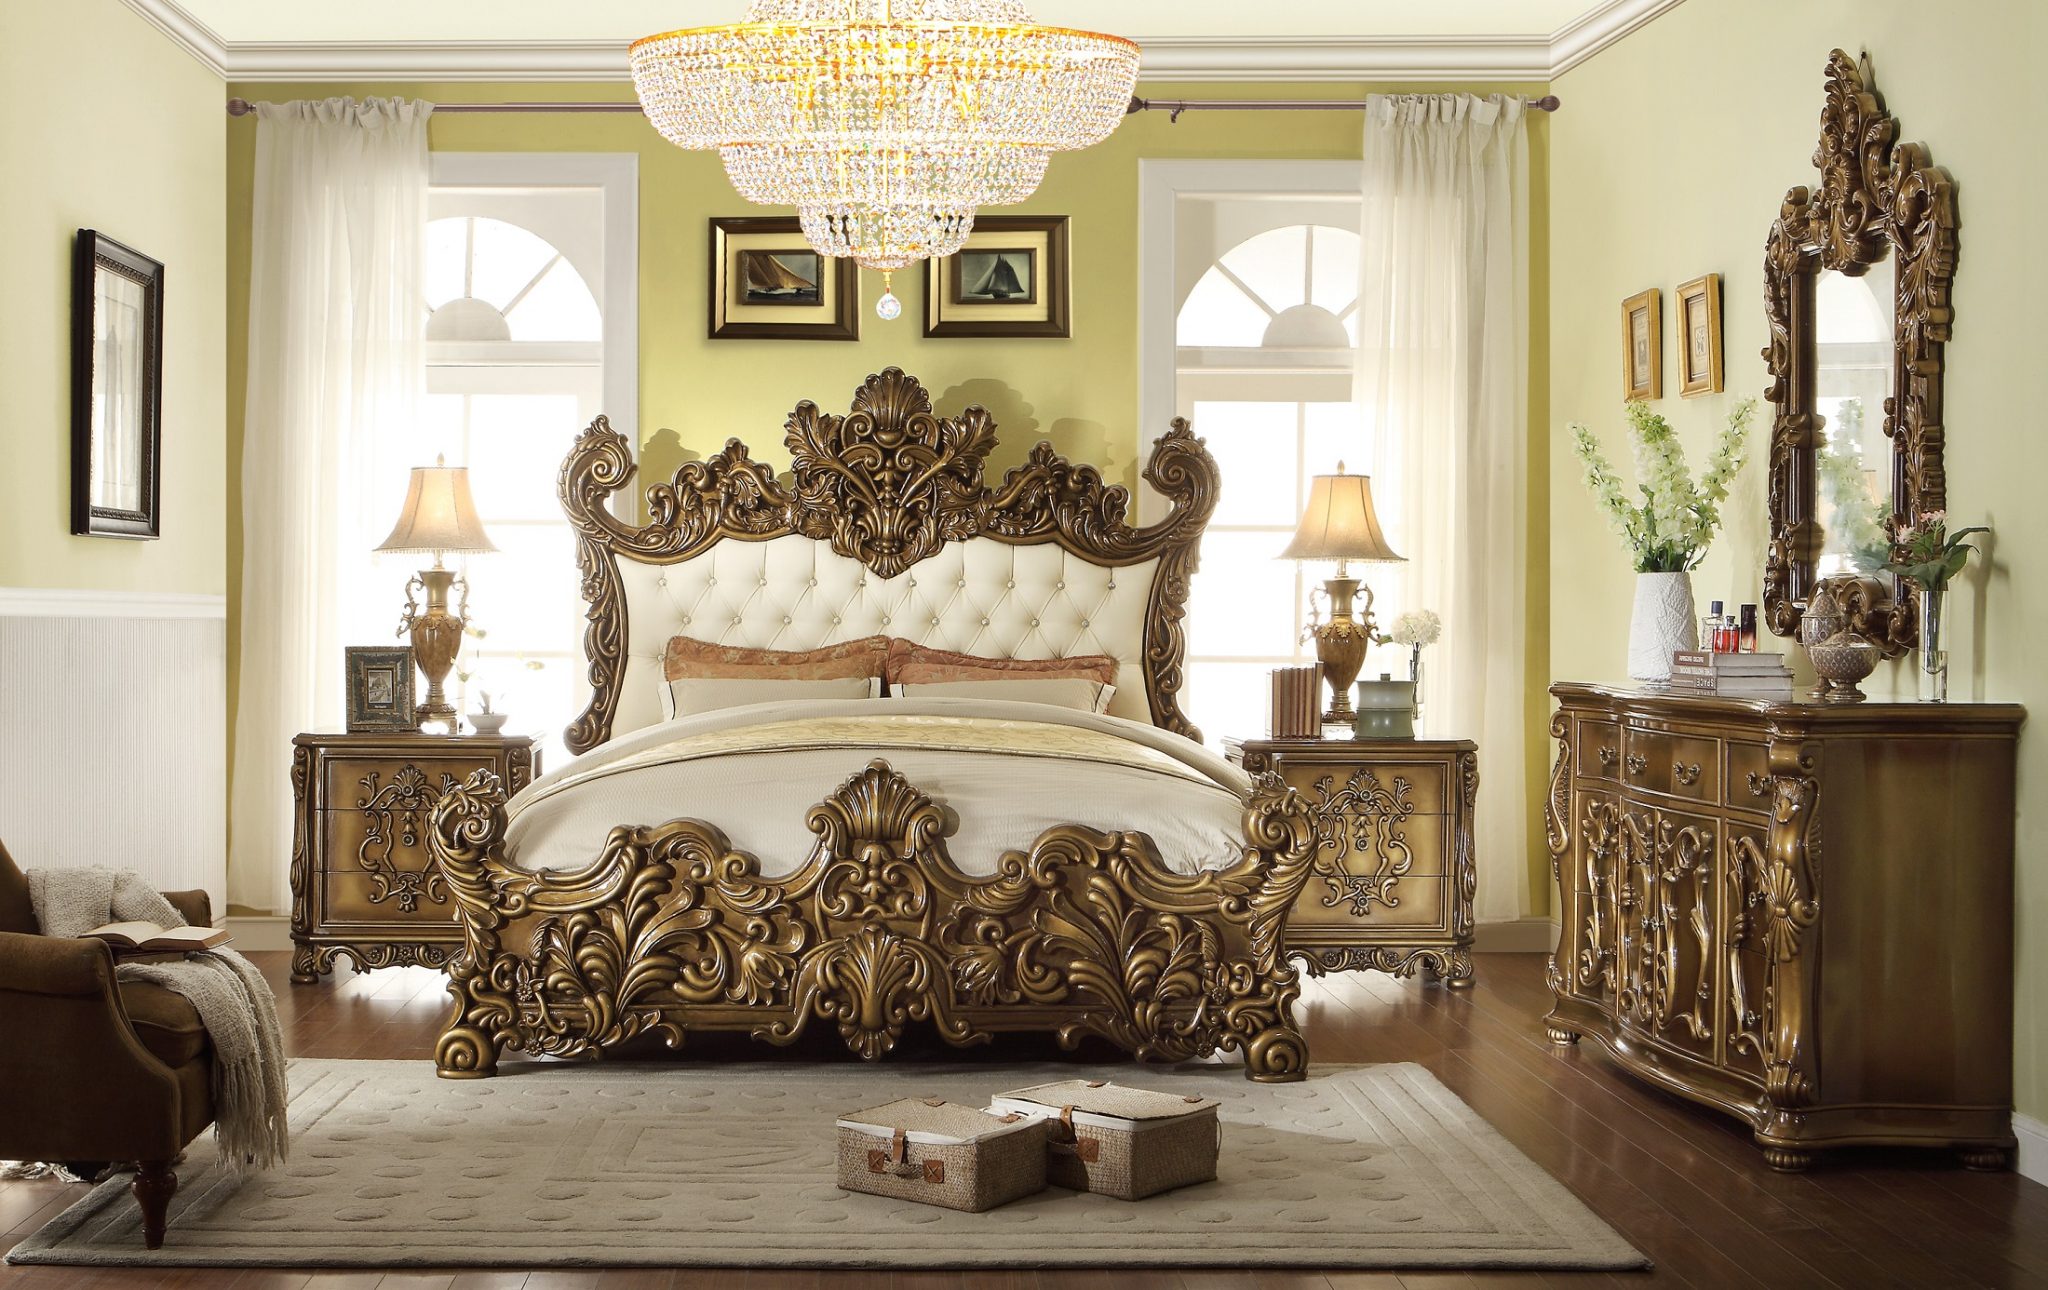 5-Pc HD-8008 Homey Design Golden Royal Palace Bedroom Set.